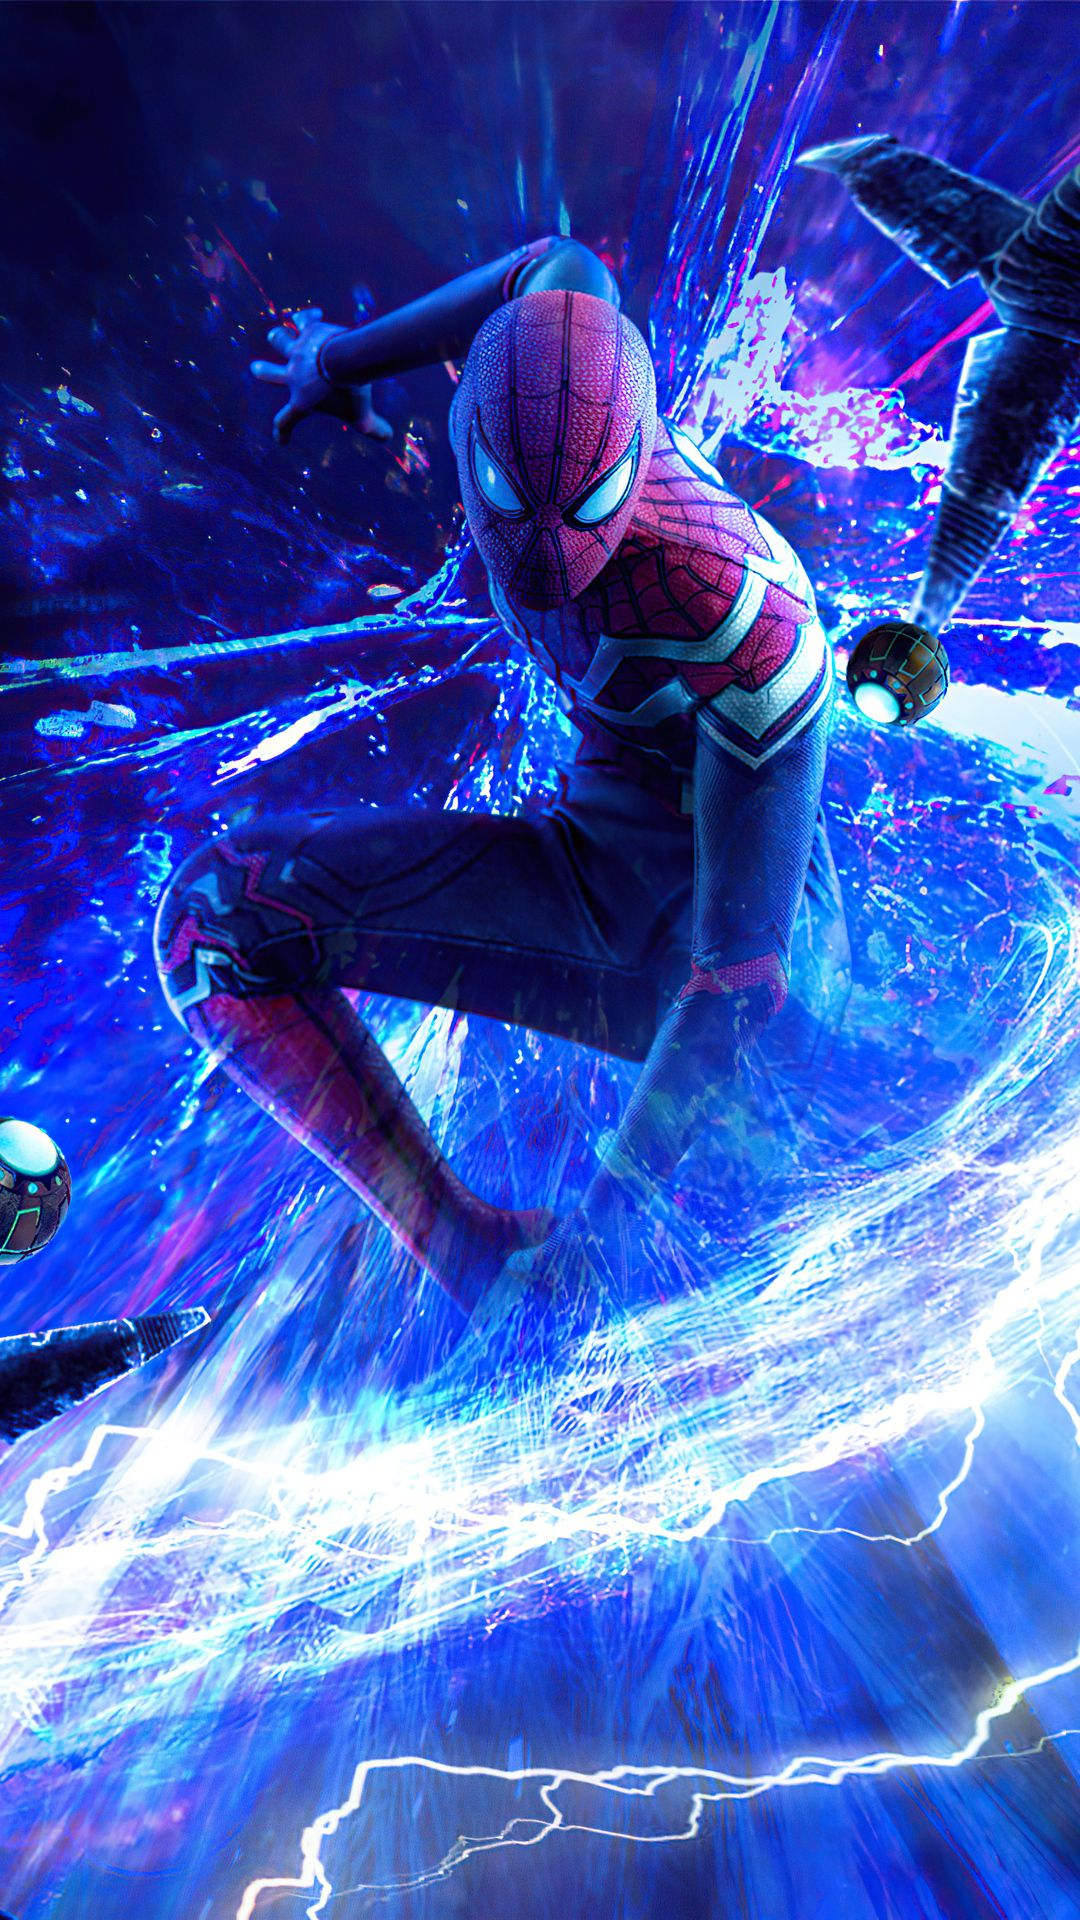 1080x1920 Neon Spider Man Wallpaper- Top Best Quality Neon Spider Man Backgrounds (HD,4k